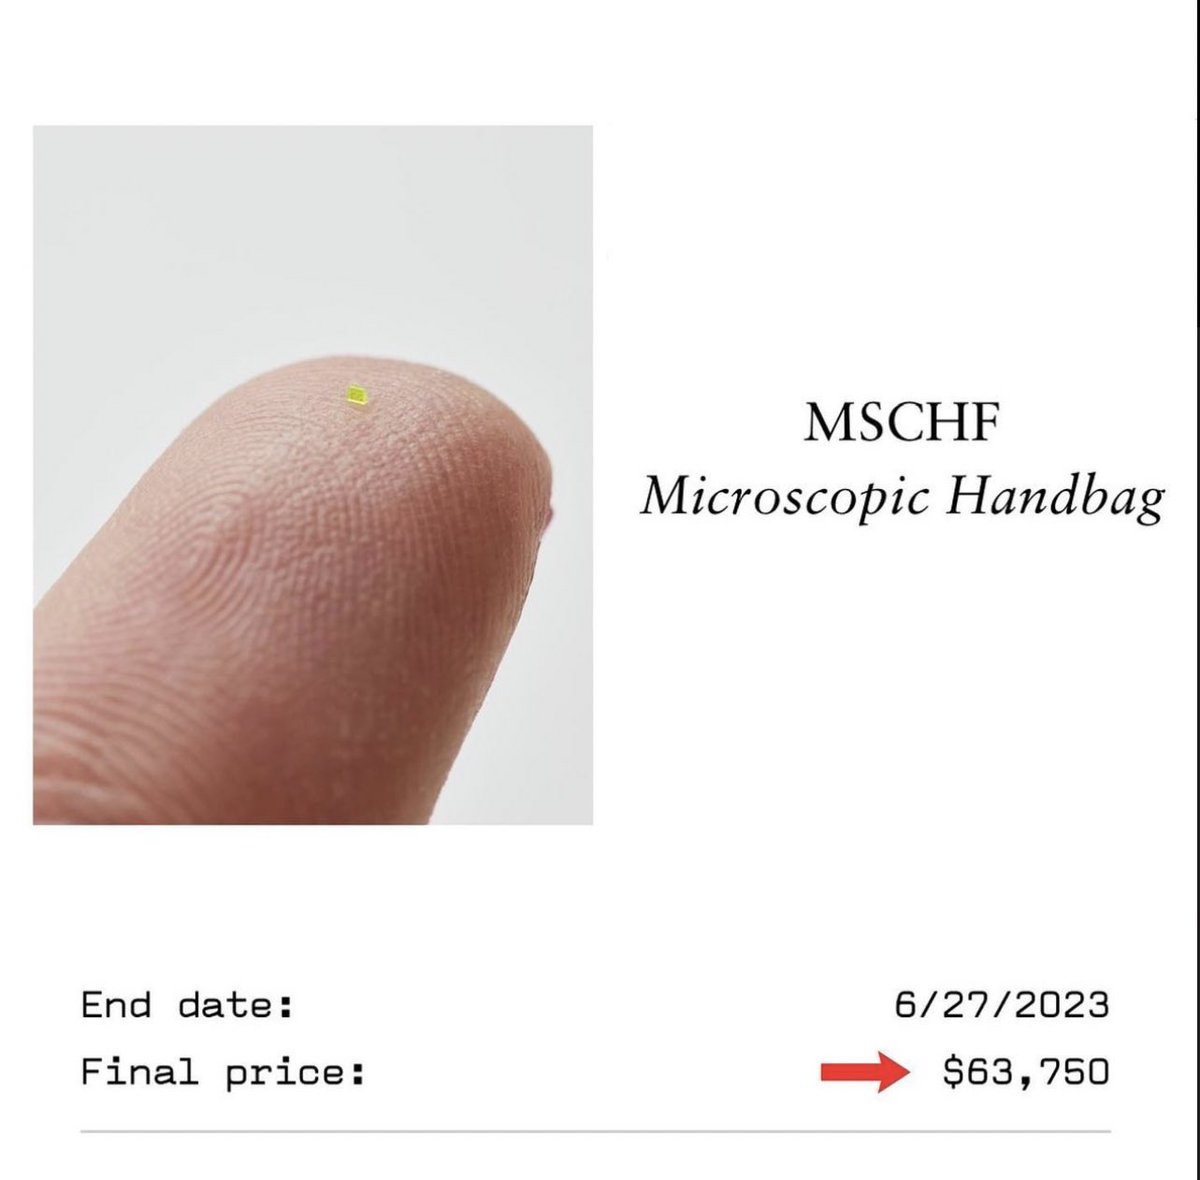 kenzo 👑 on X: RT @StreetFashion01: The MSCHF “Microscopic Handbag” Sold  for $63,750 at Pharrell's JOOPITER Auction (2023)   / X